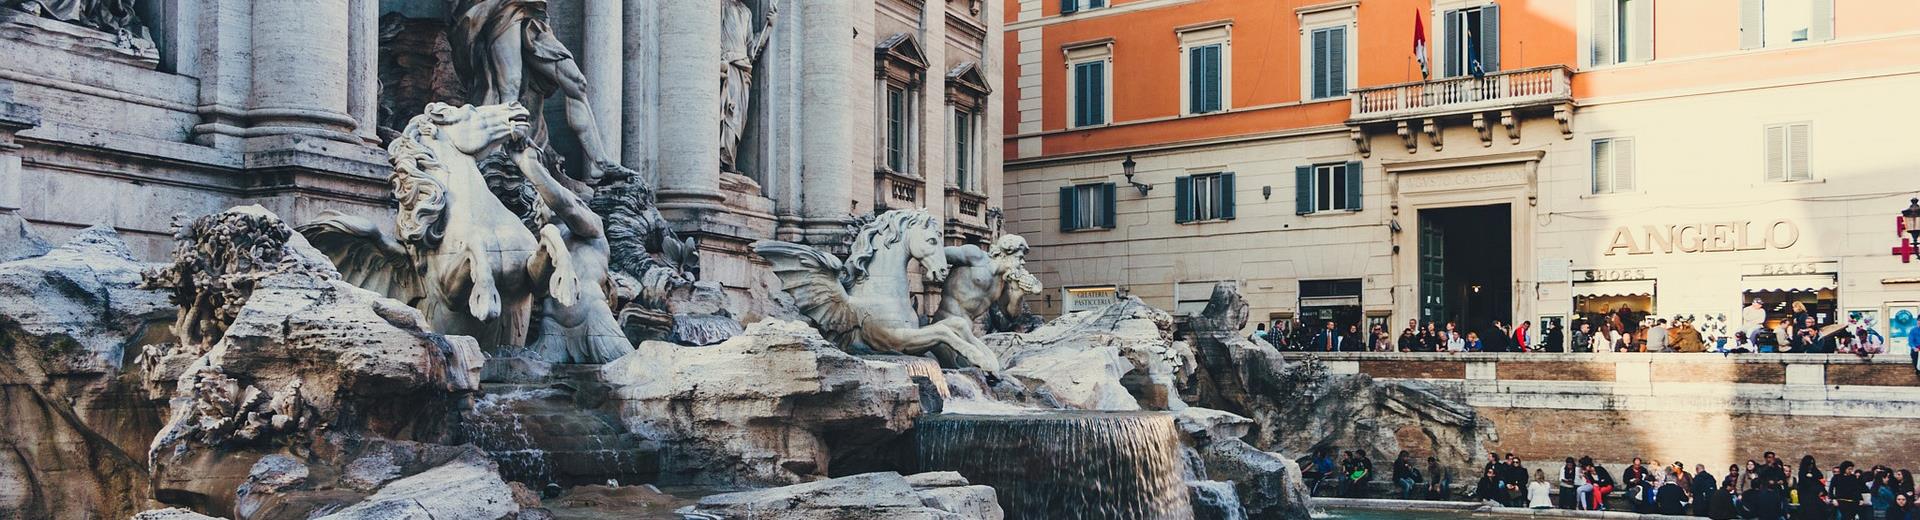 Trevi Fountain-Hotel 3 stars Rome